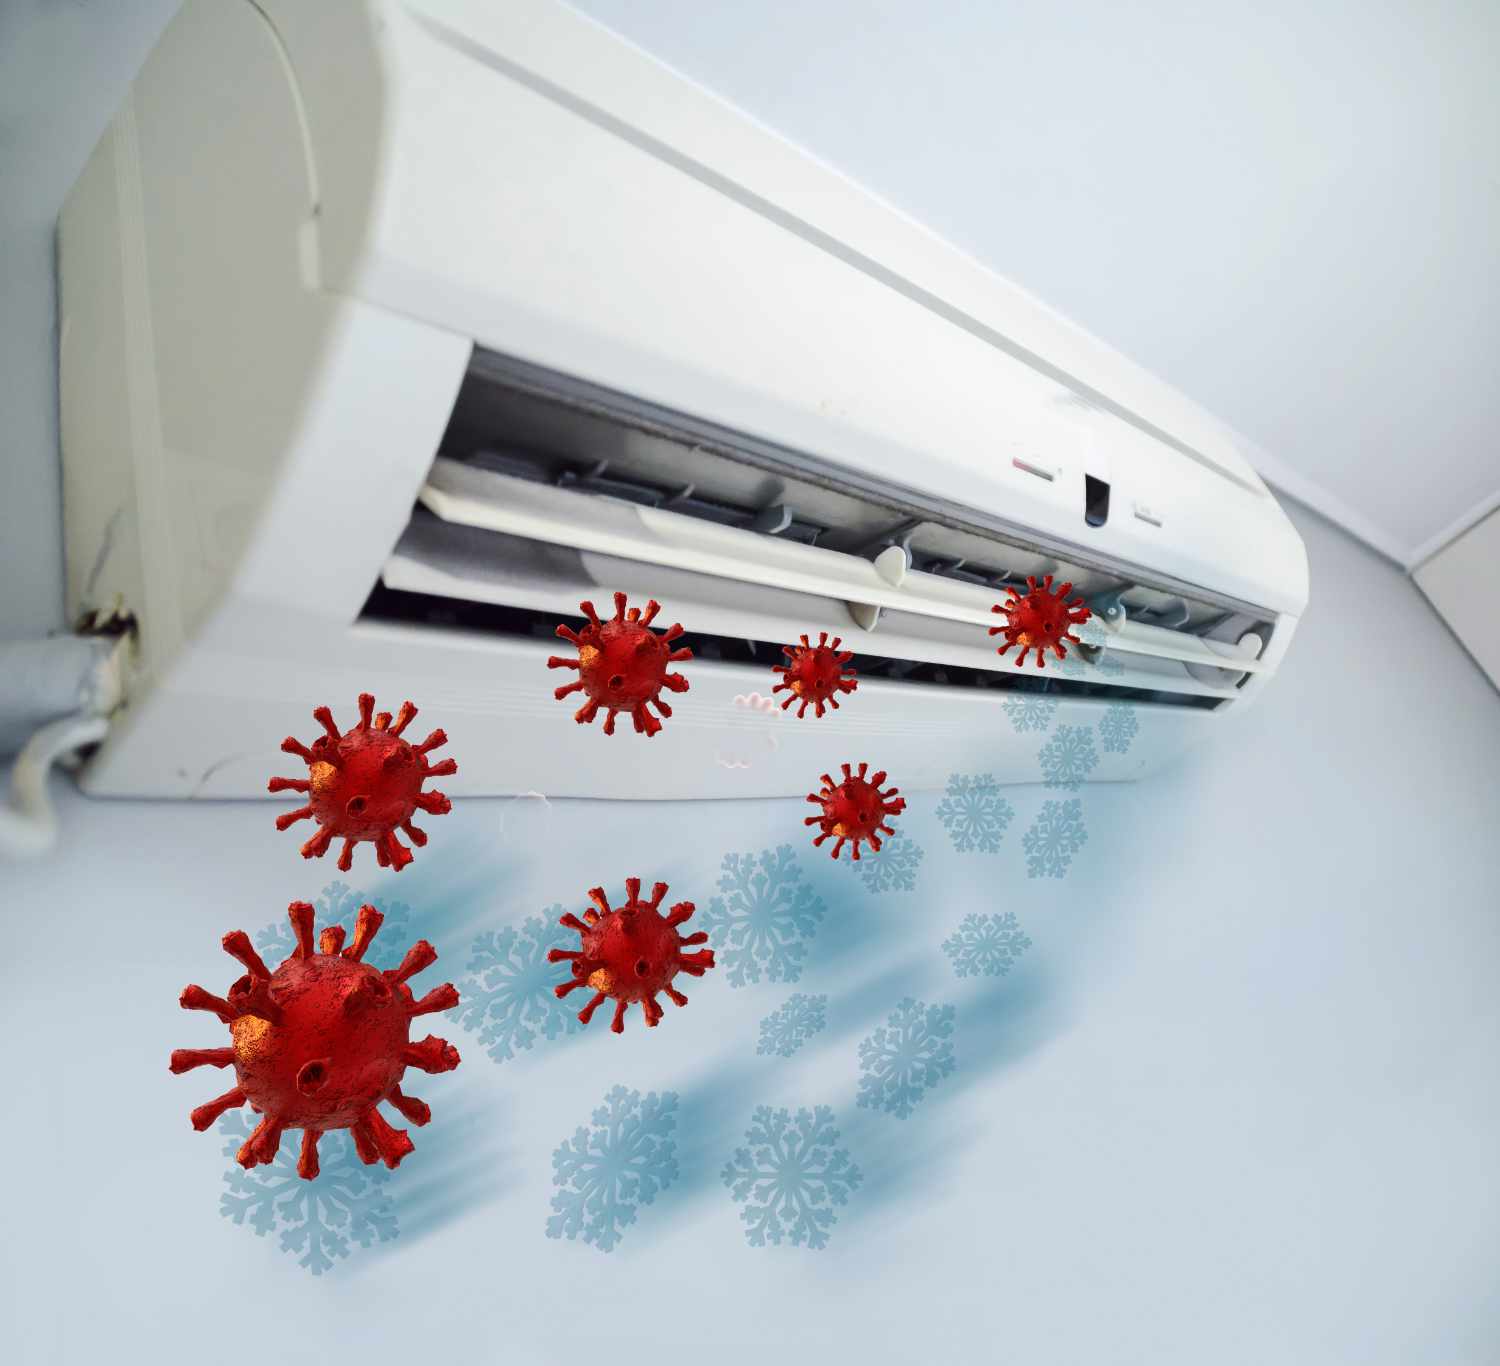 coronavirus particles entering an air conditioner